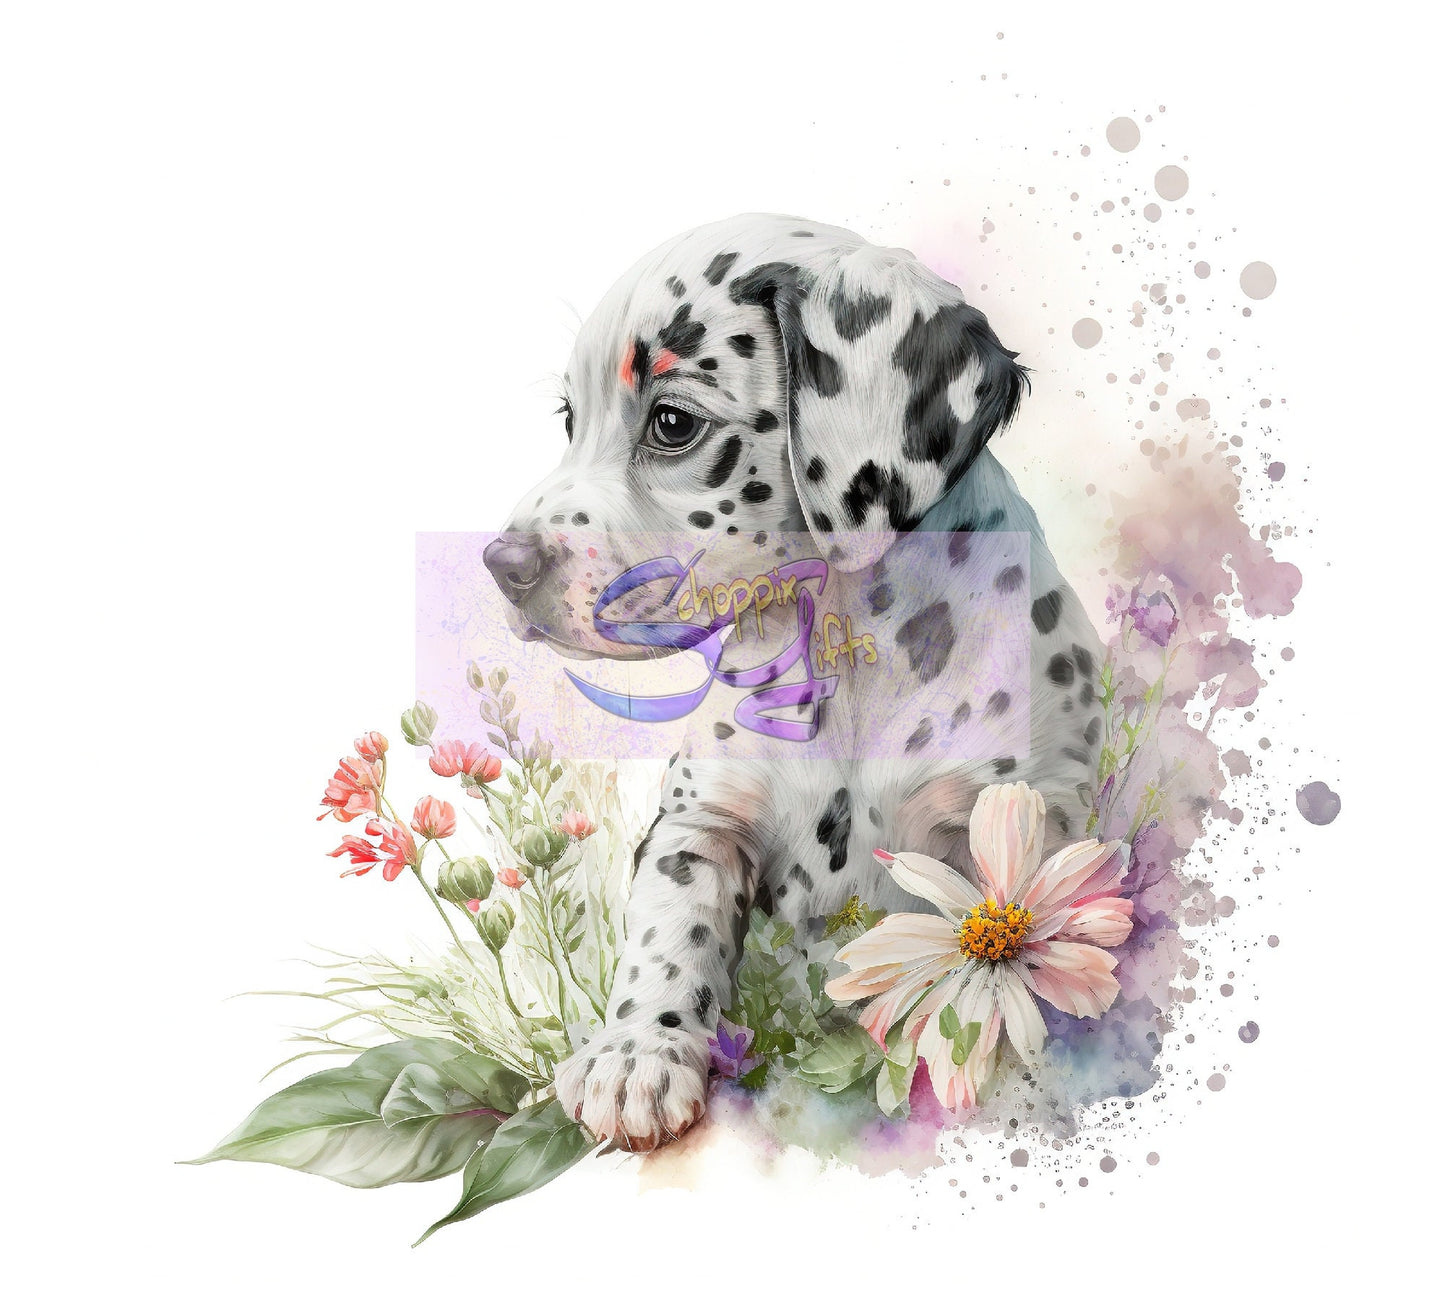 Dalmatian Puppy Art 20oz Skinny Tumbler - Stainless Steel